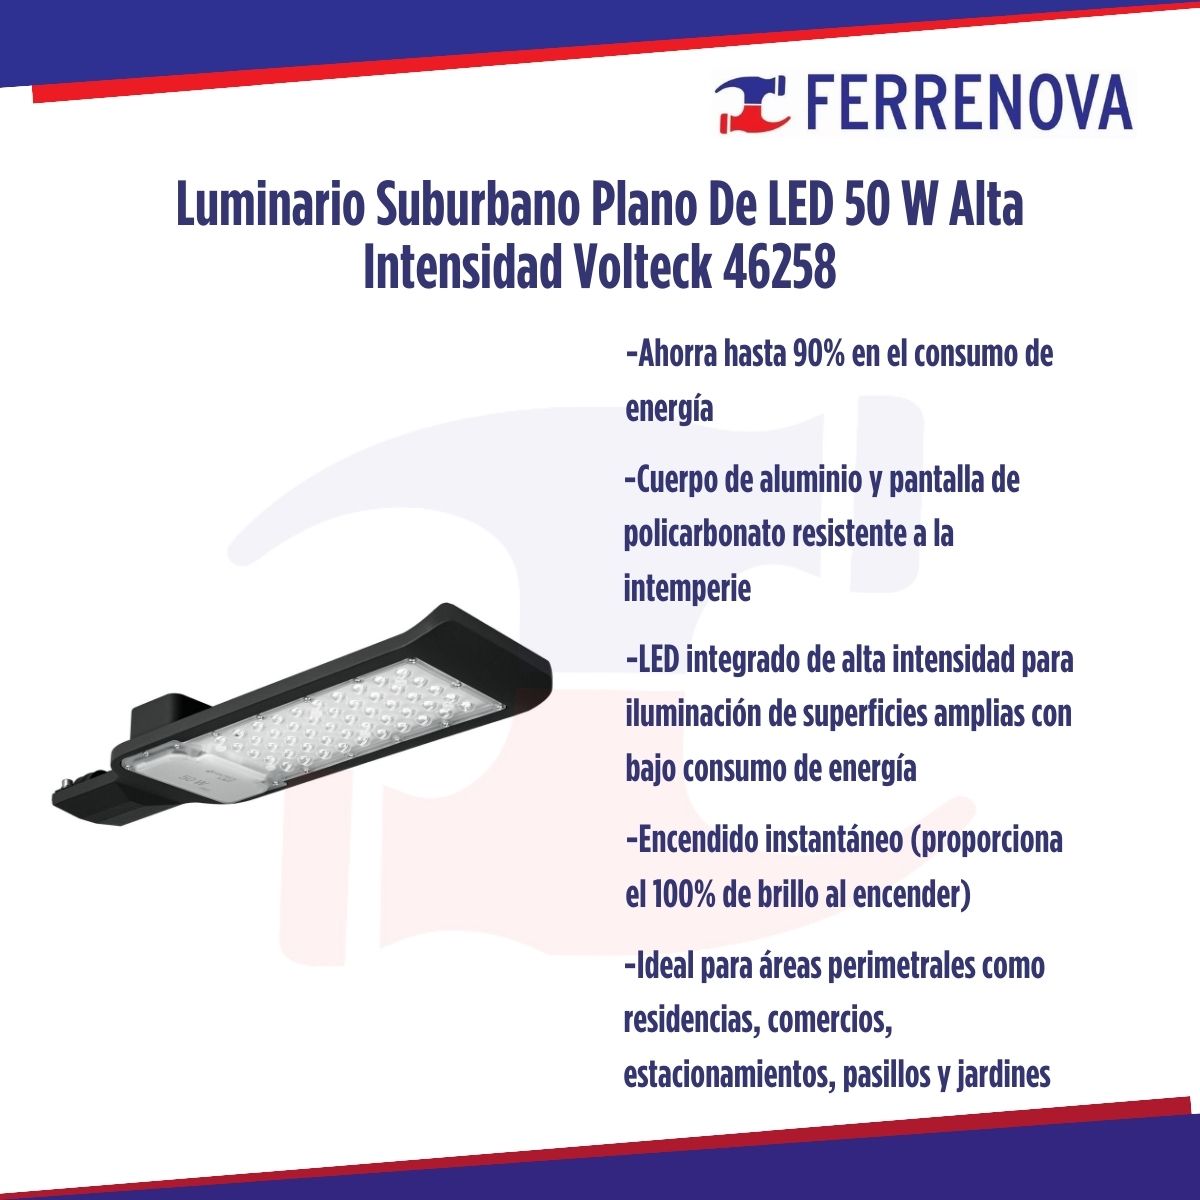 Luminario Suburbano Plano De LED 50 W Alta Intensidad Volteck 46258